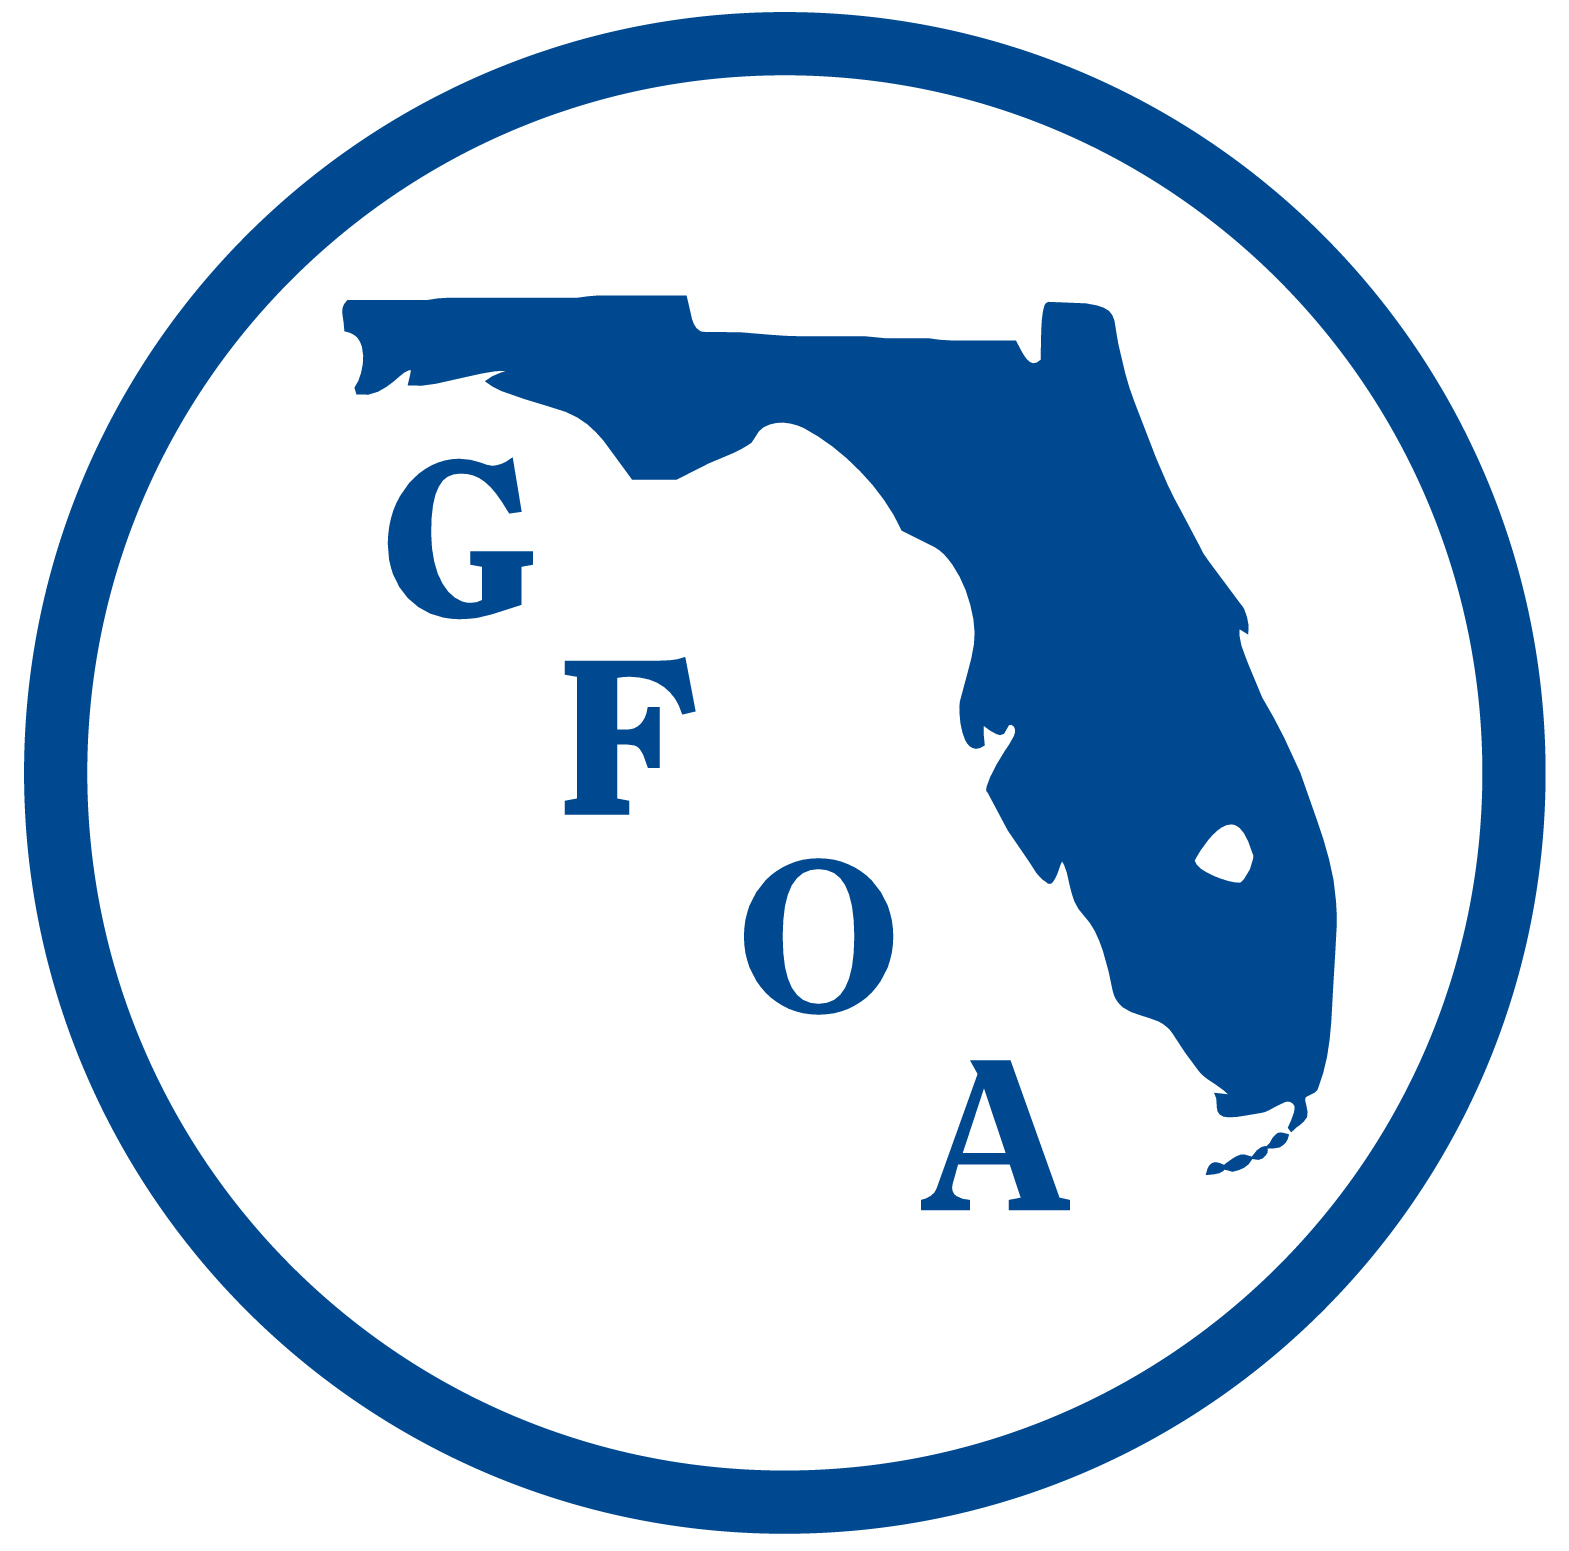 FGFOA 2017 School of Governmental Finance